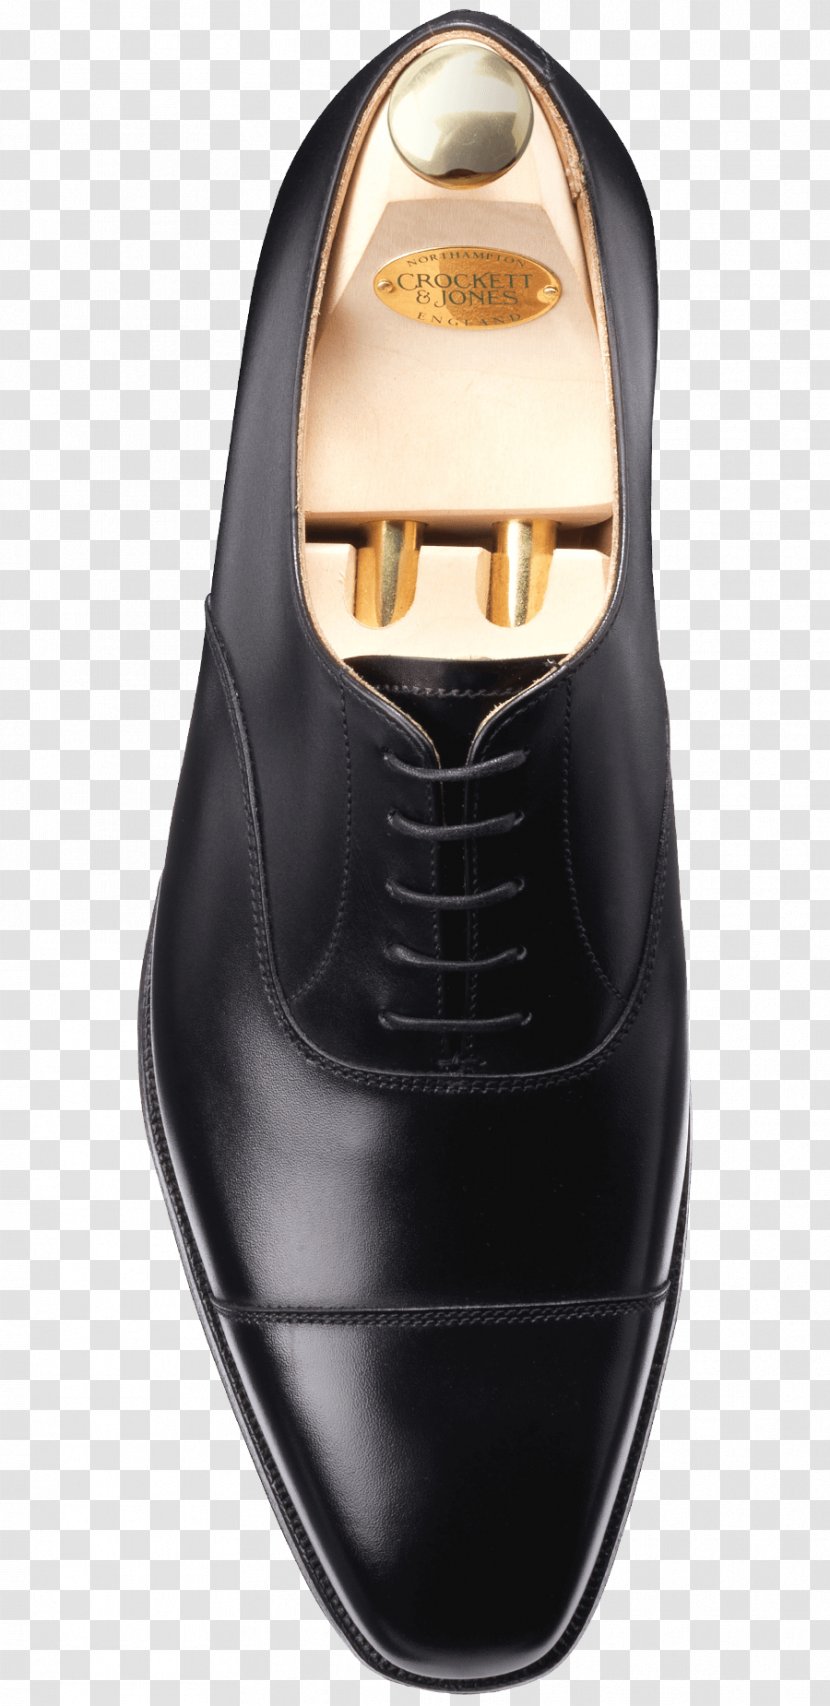 Slip-on Shoe Dress Oxford Crockett & Jones - Last - England Tidal Shoes Transparent PNG